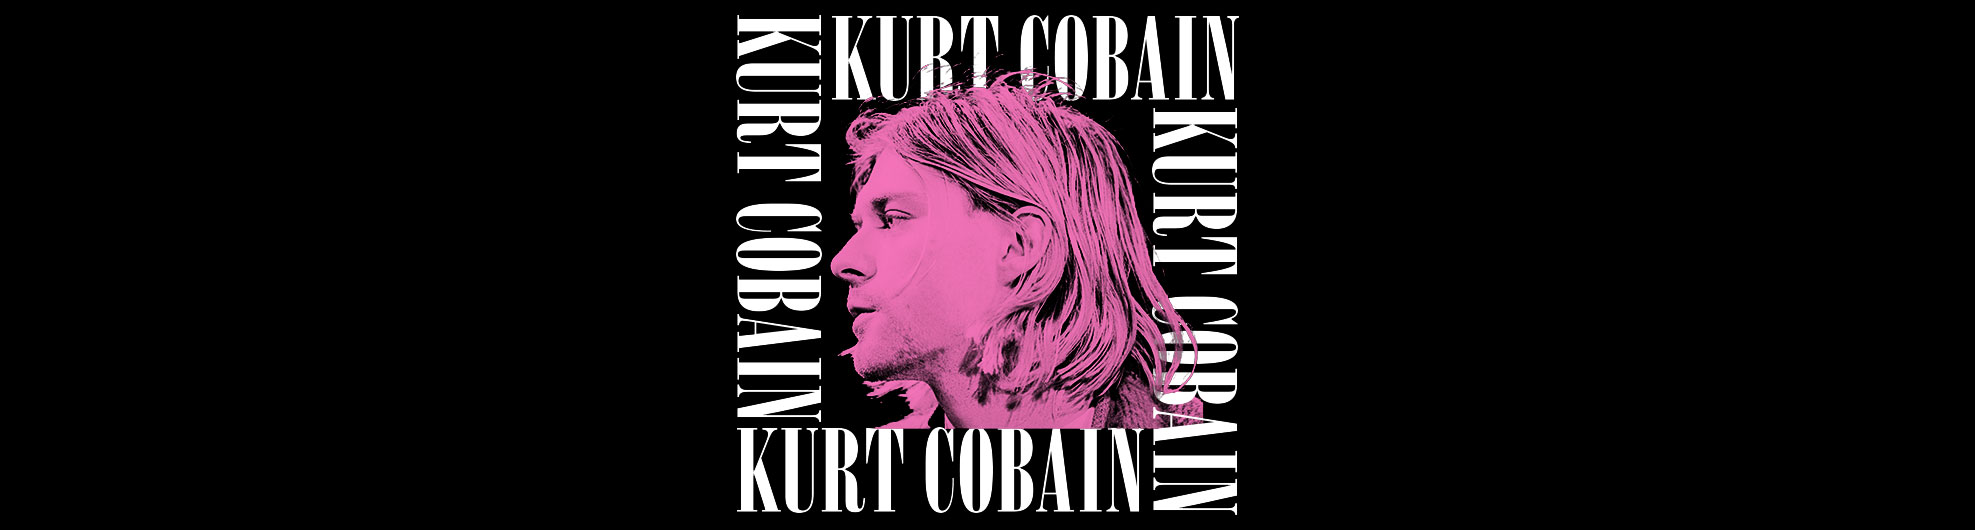 Kurt Cobain Official Licensed Merchandise new for 2019